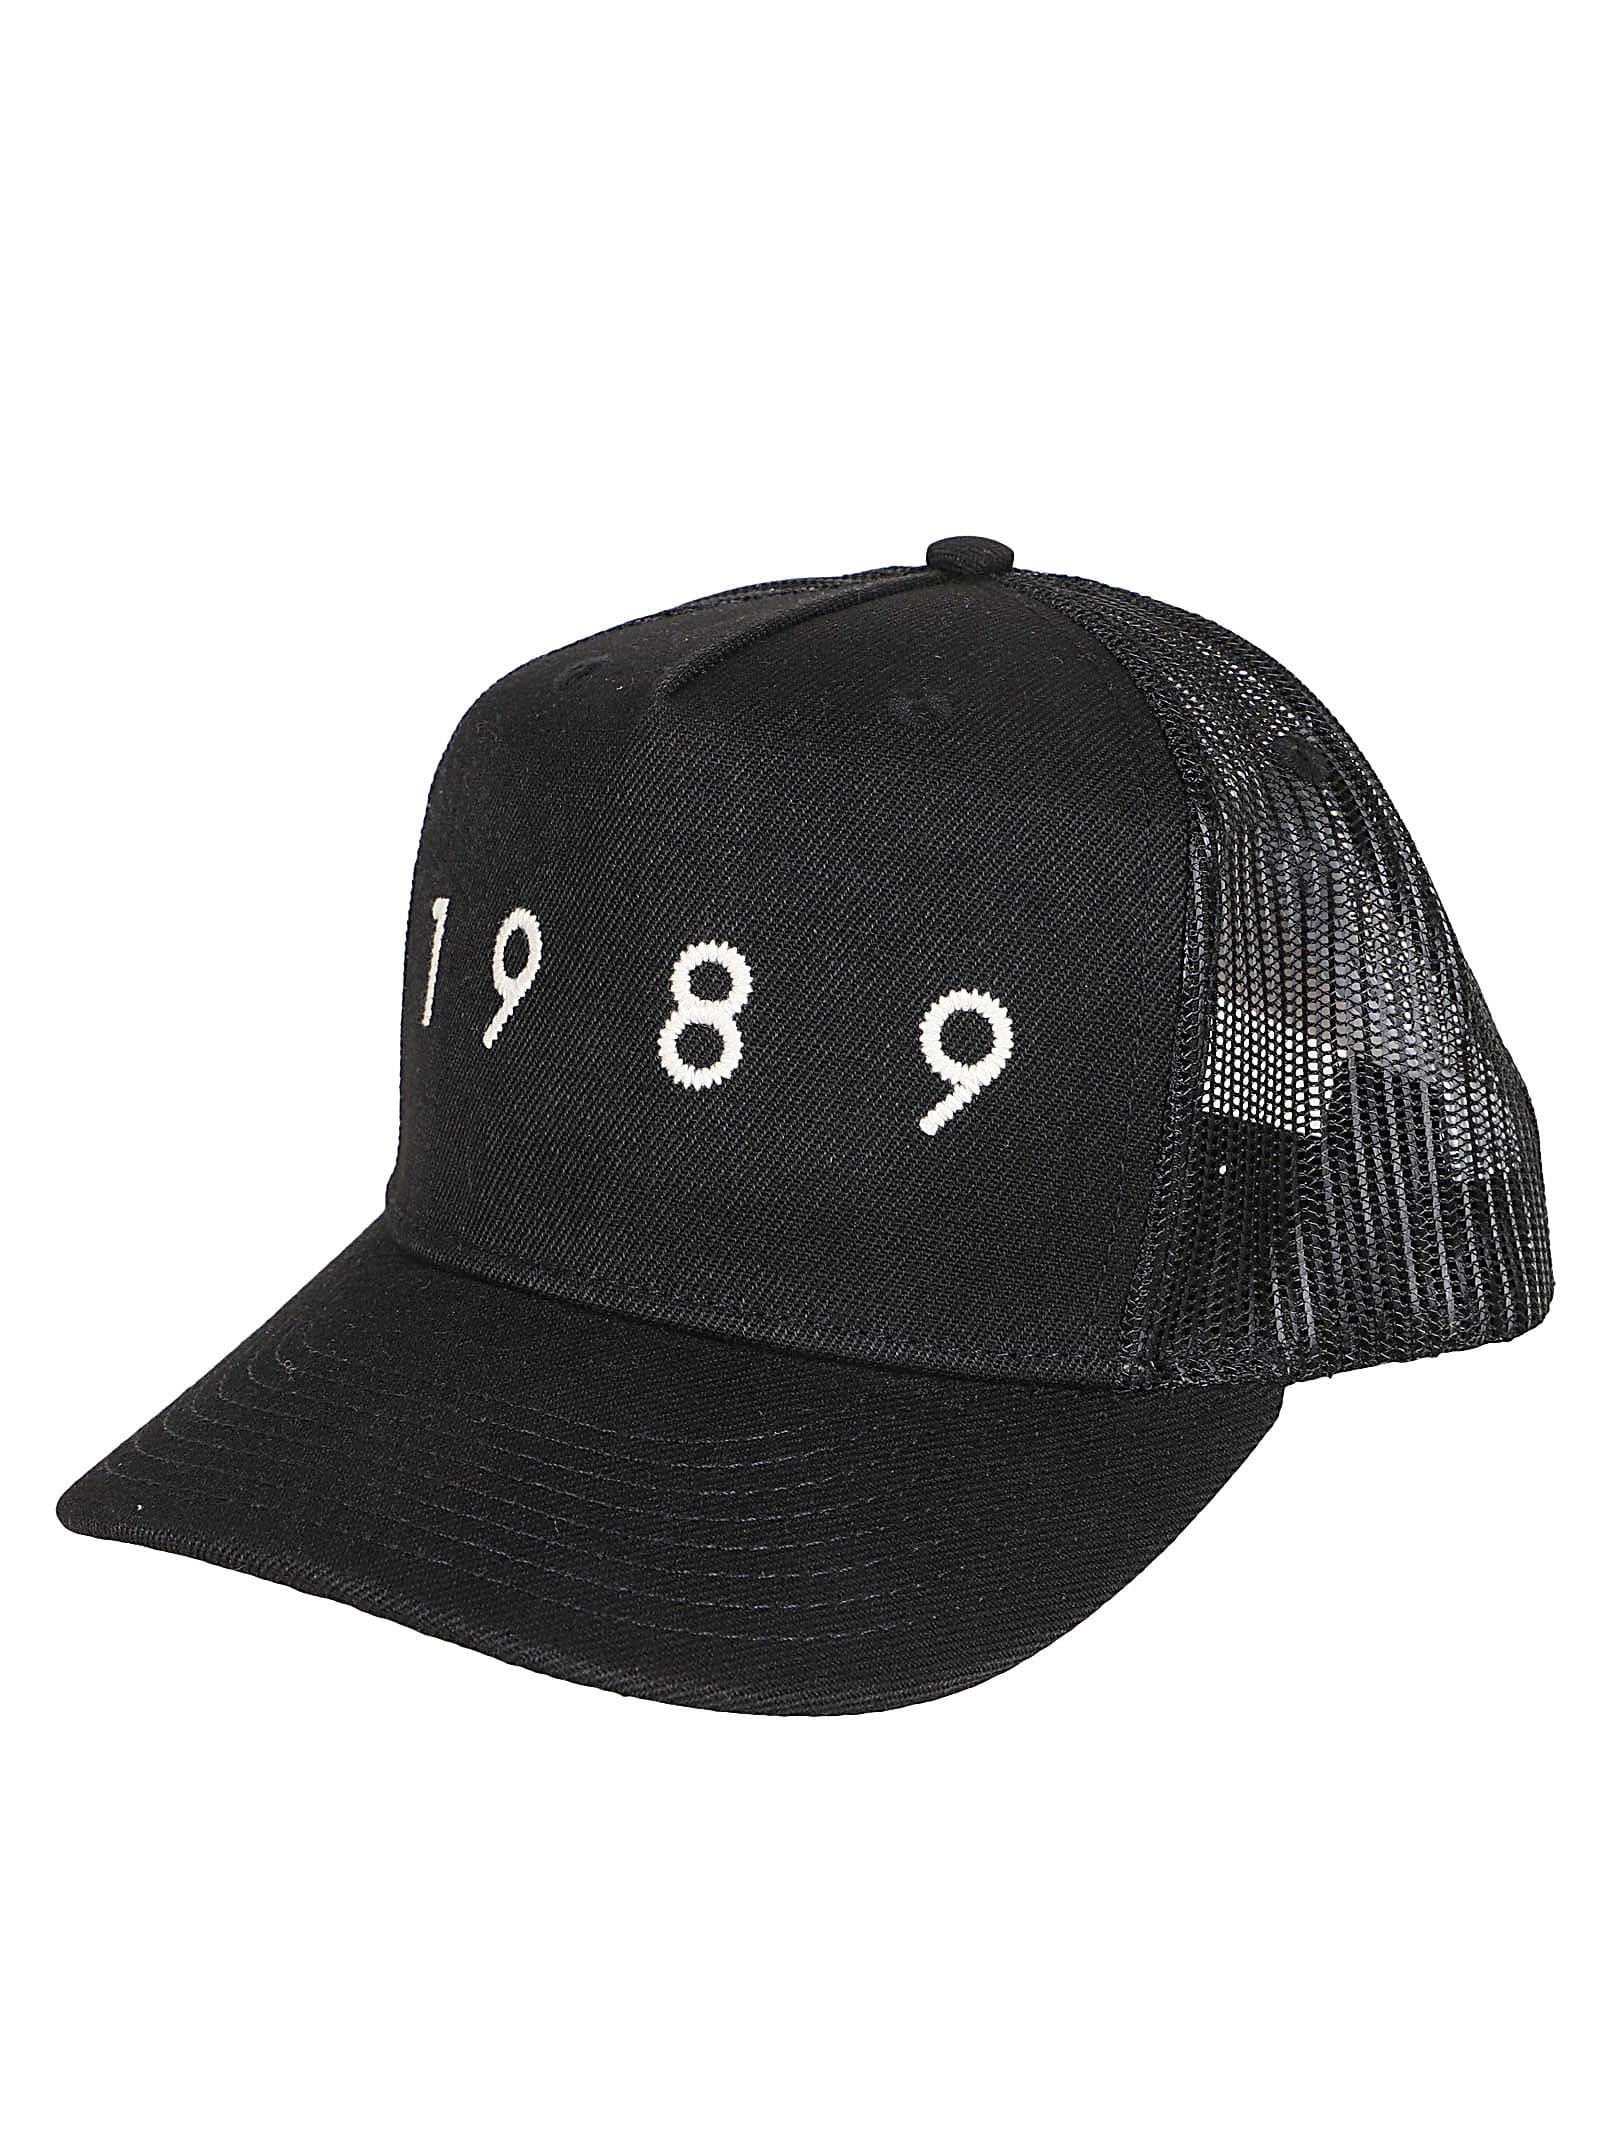 1989 STUDIO HAT